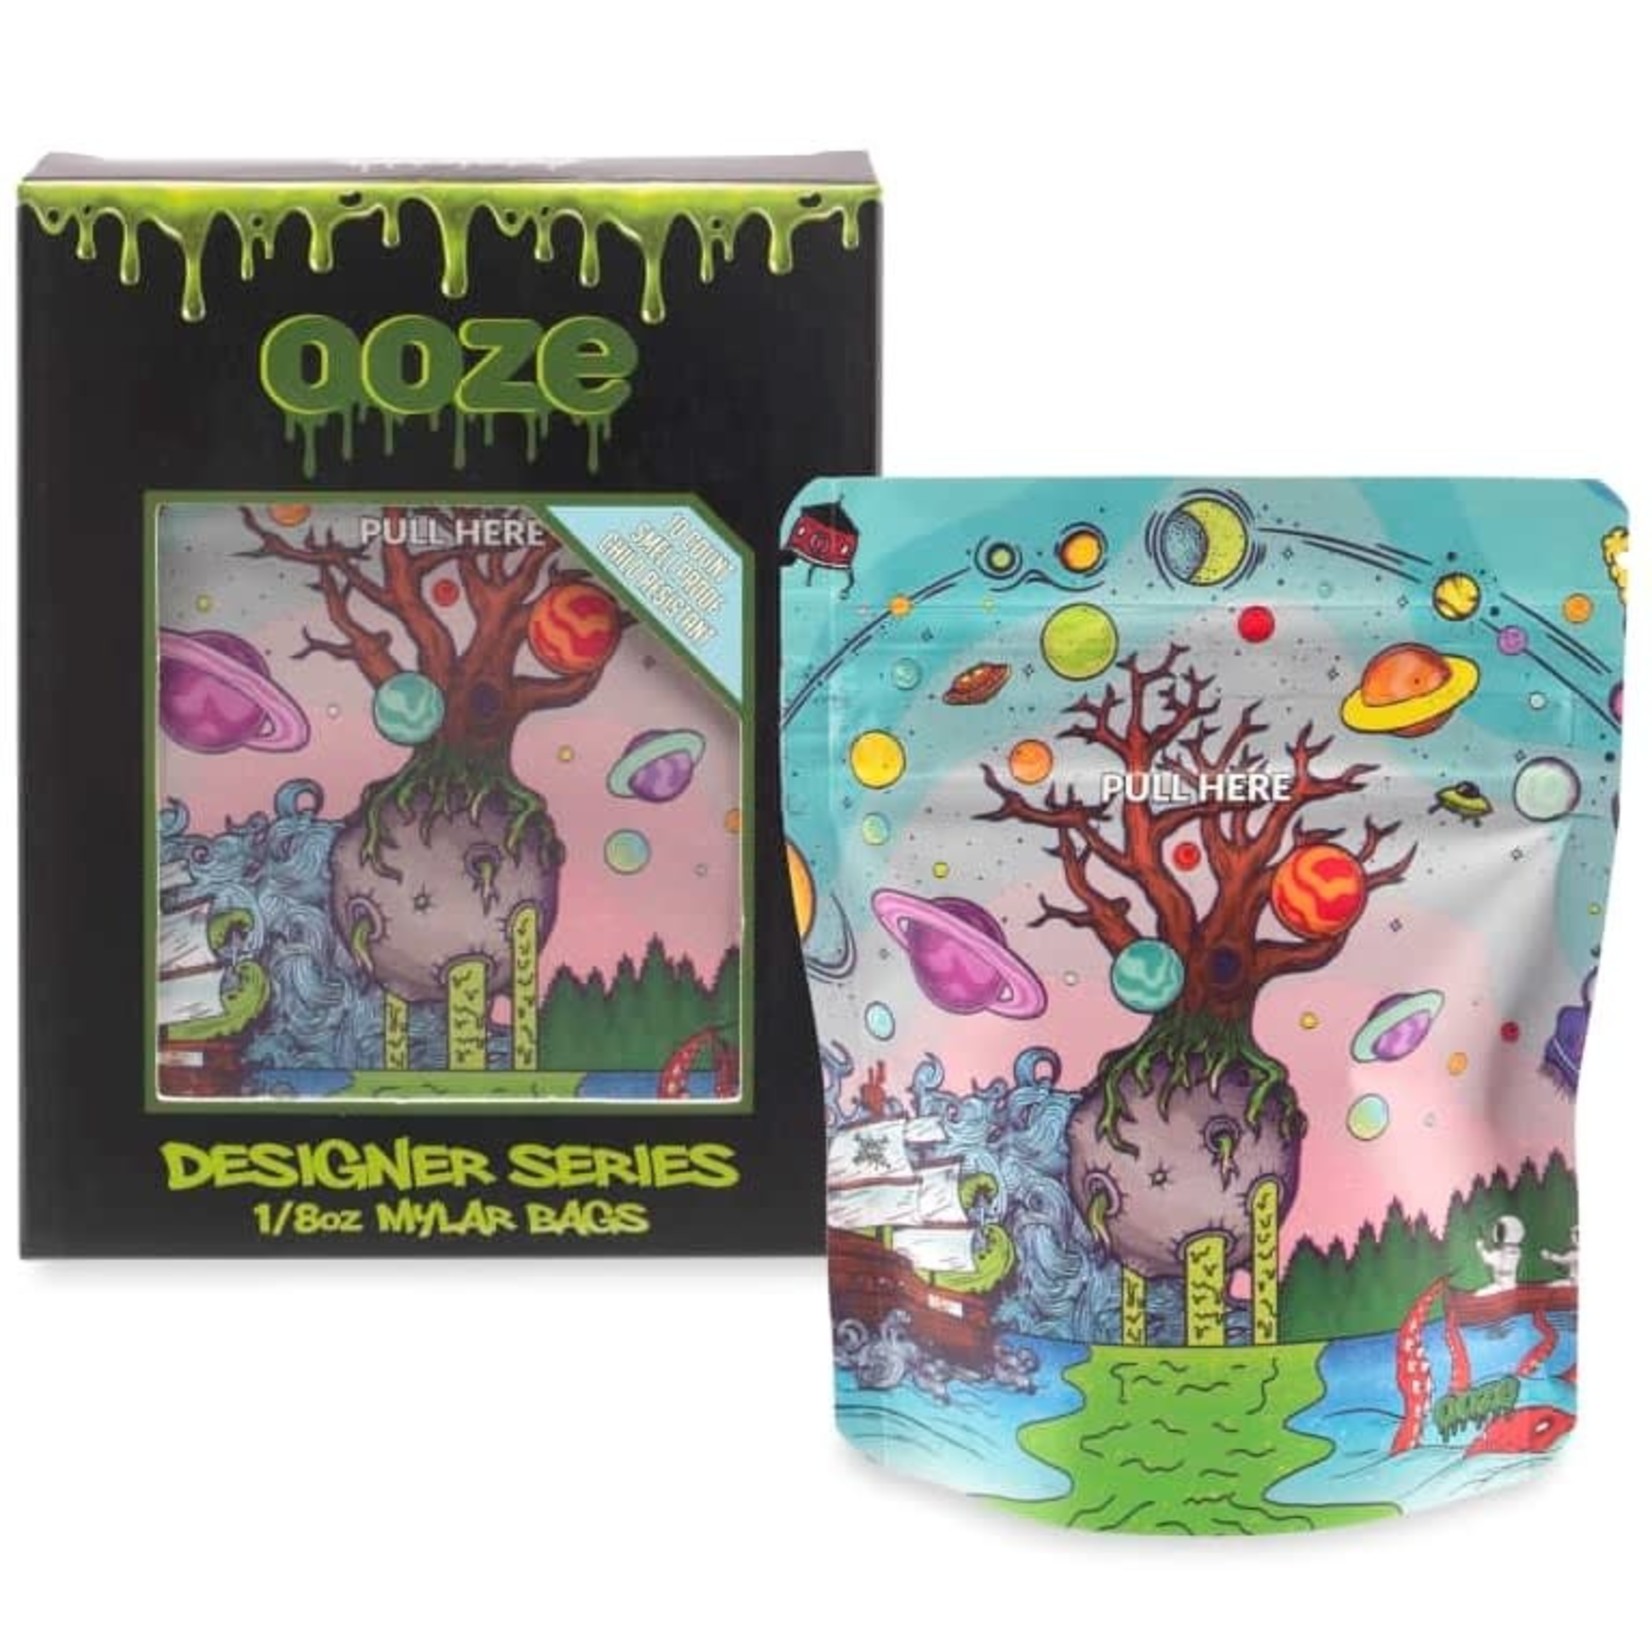 Ooze Ooze Designer Mylar Bags - Tree Of Life